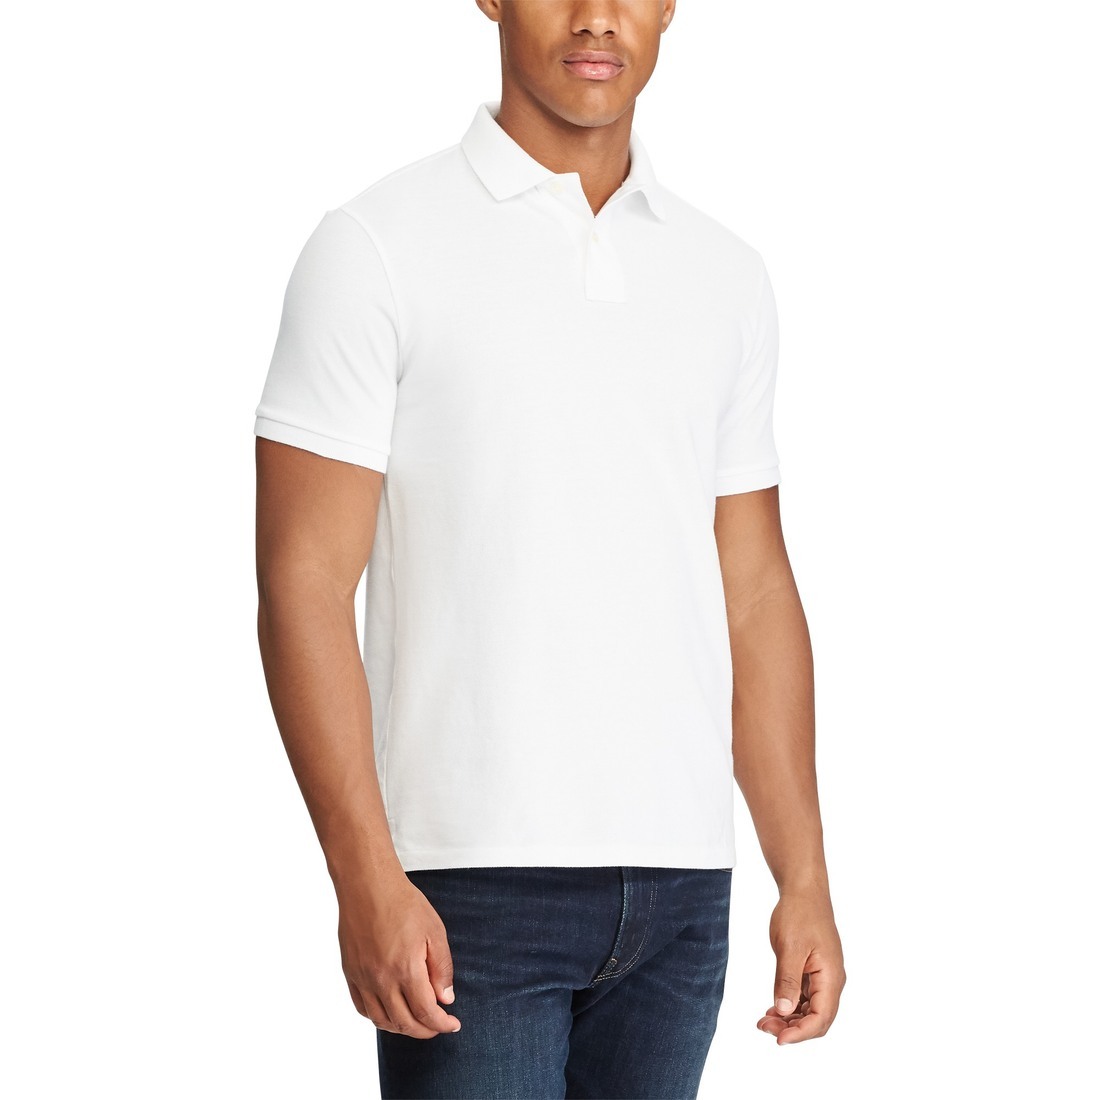 Arrow Sports Brand Print Cotton Polo Shirt, White (S)